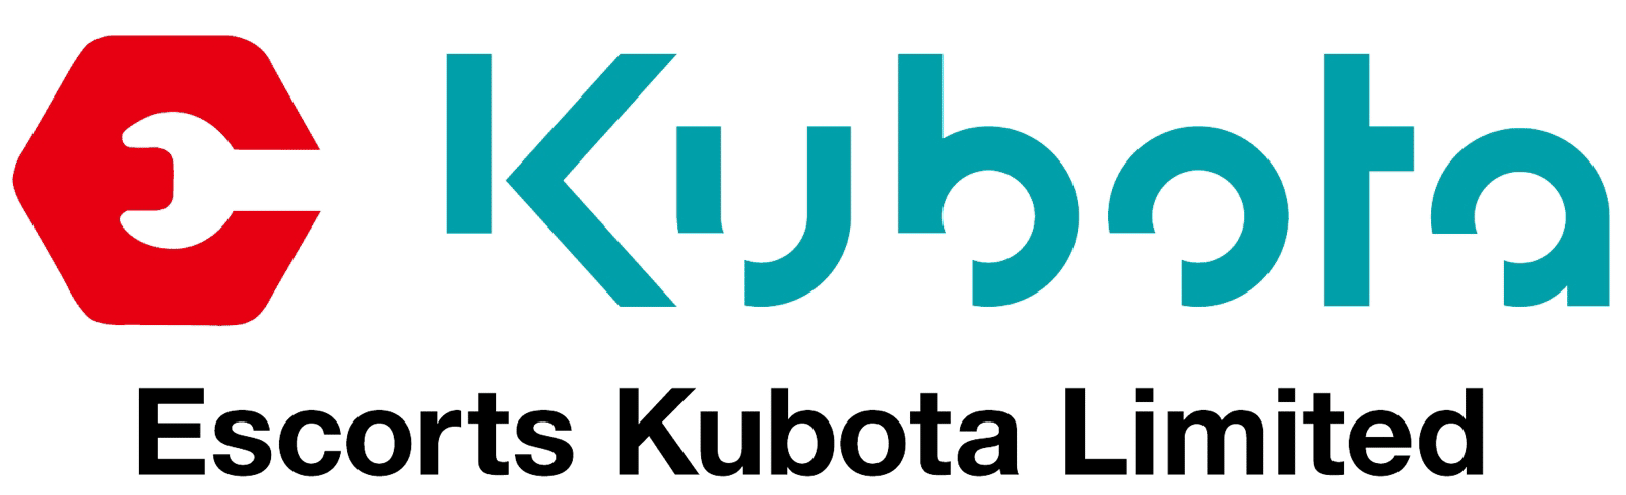 Escorts Kubota: Case Study empirical research